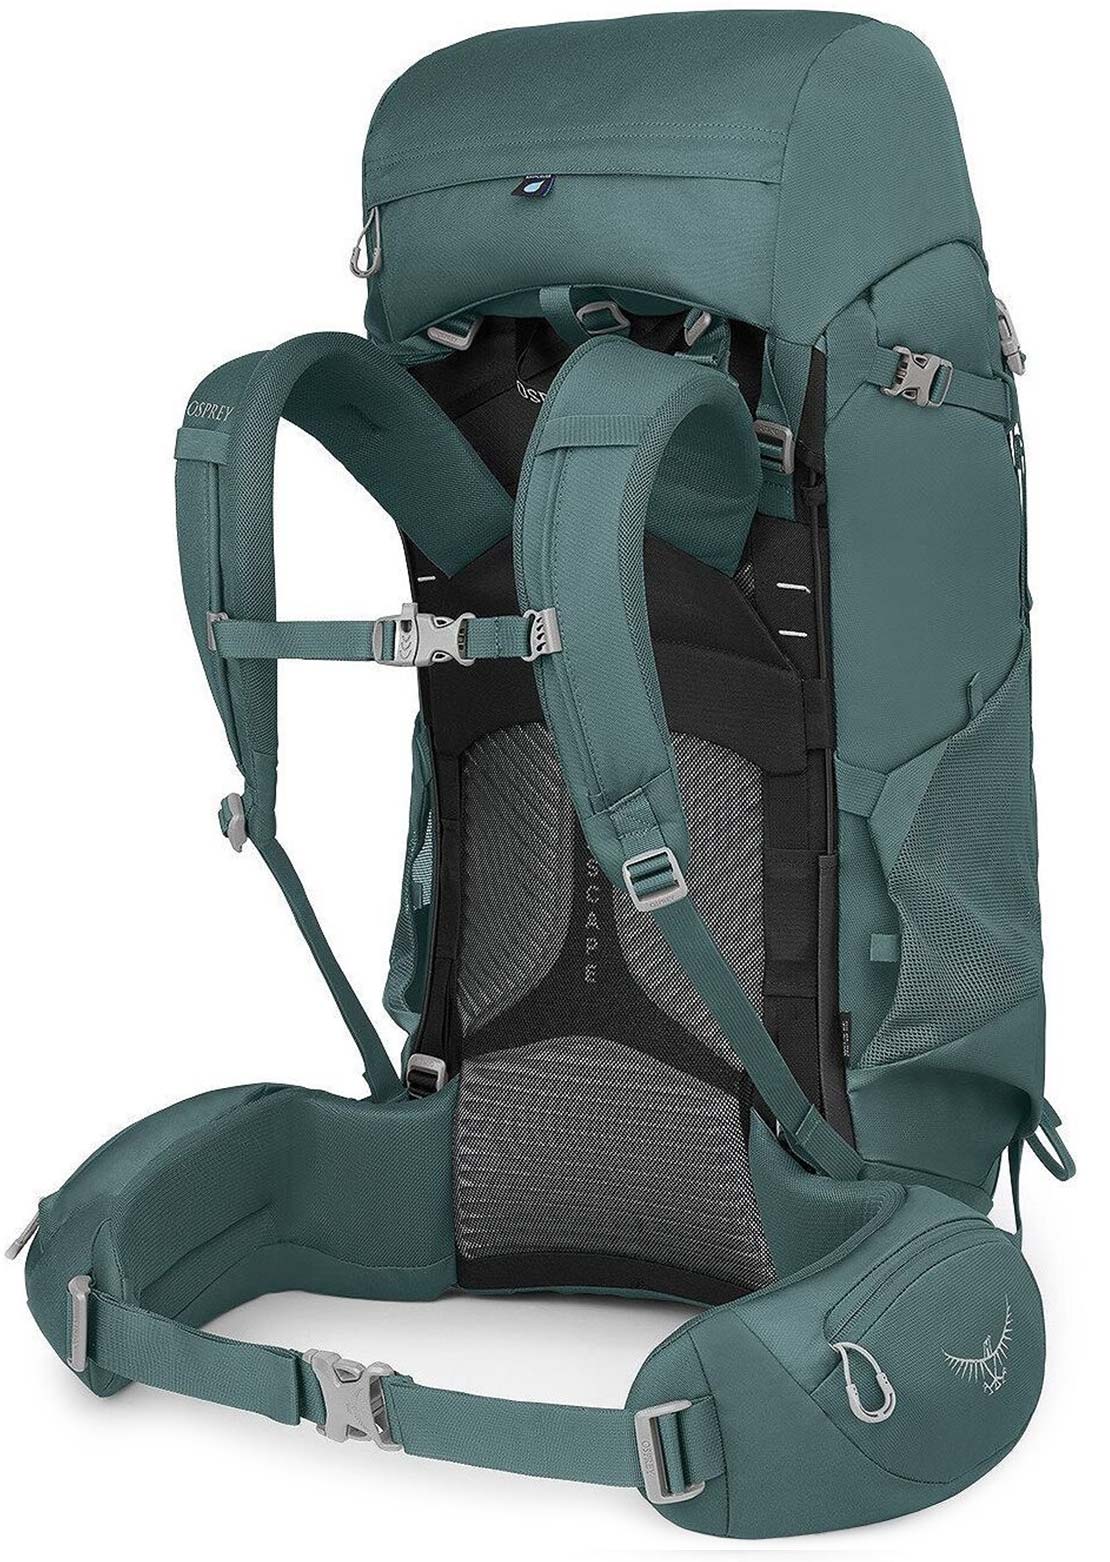 Osprey Women&#39;s Viva 65 Succulent Hiking Backpack Succulent Green